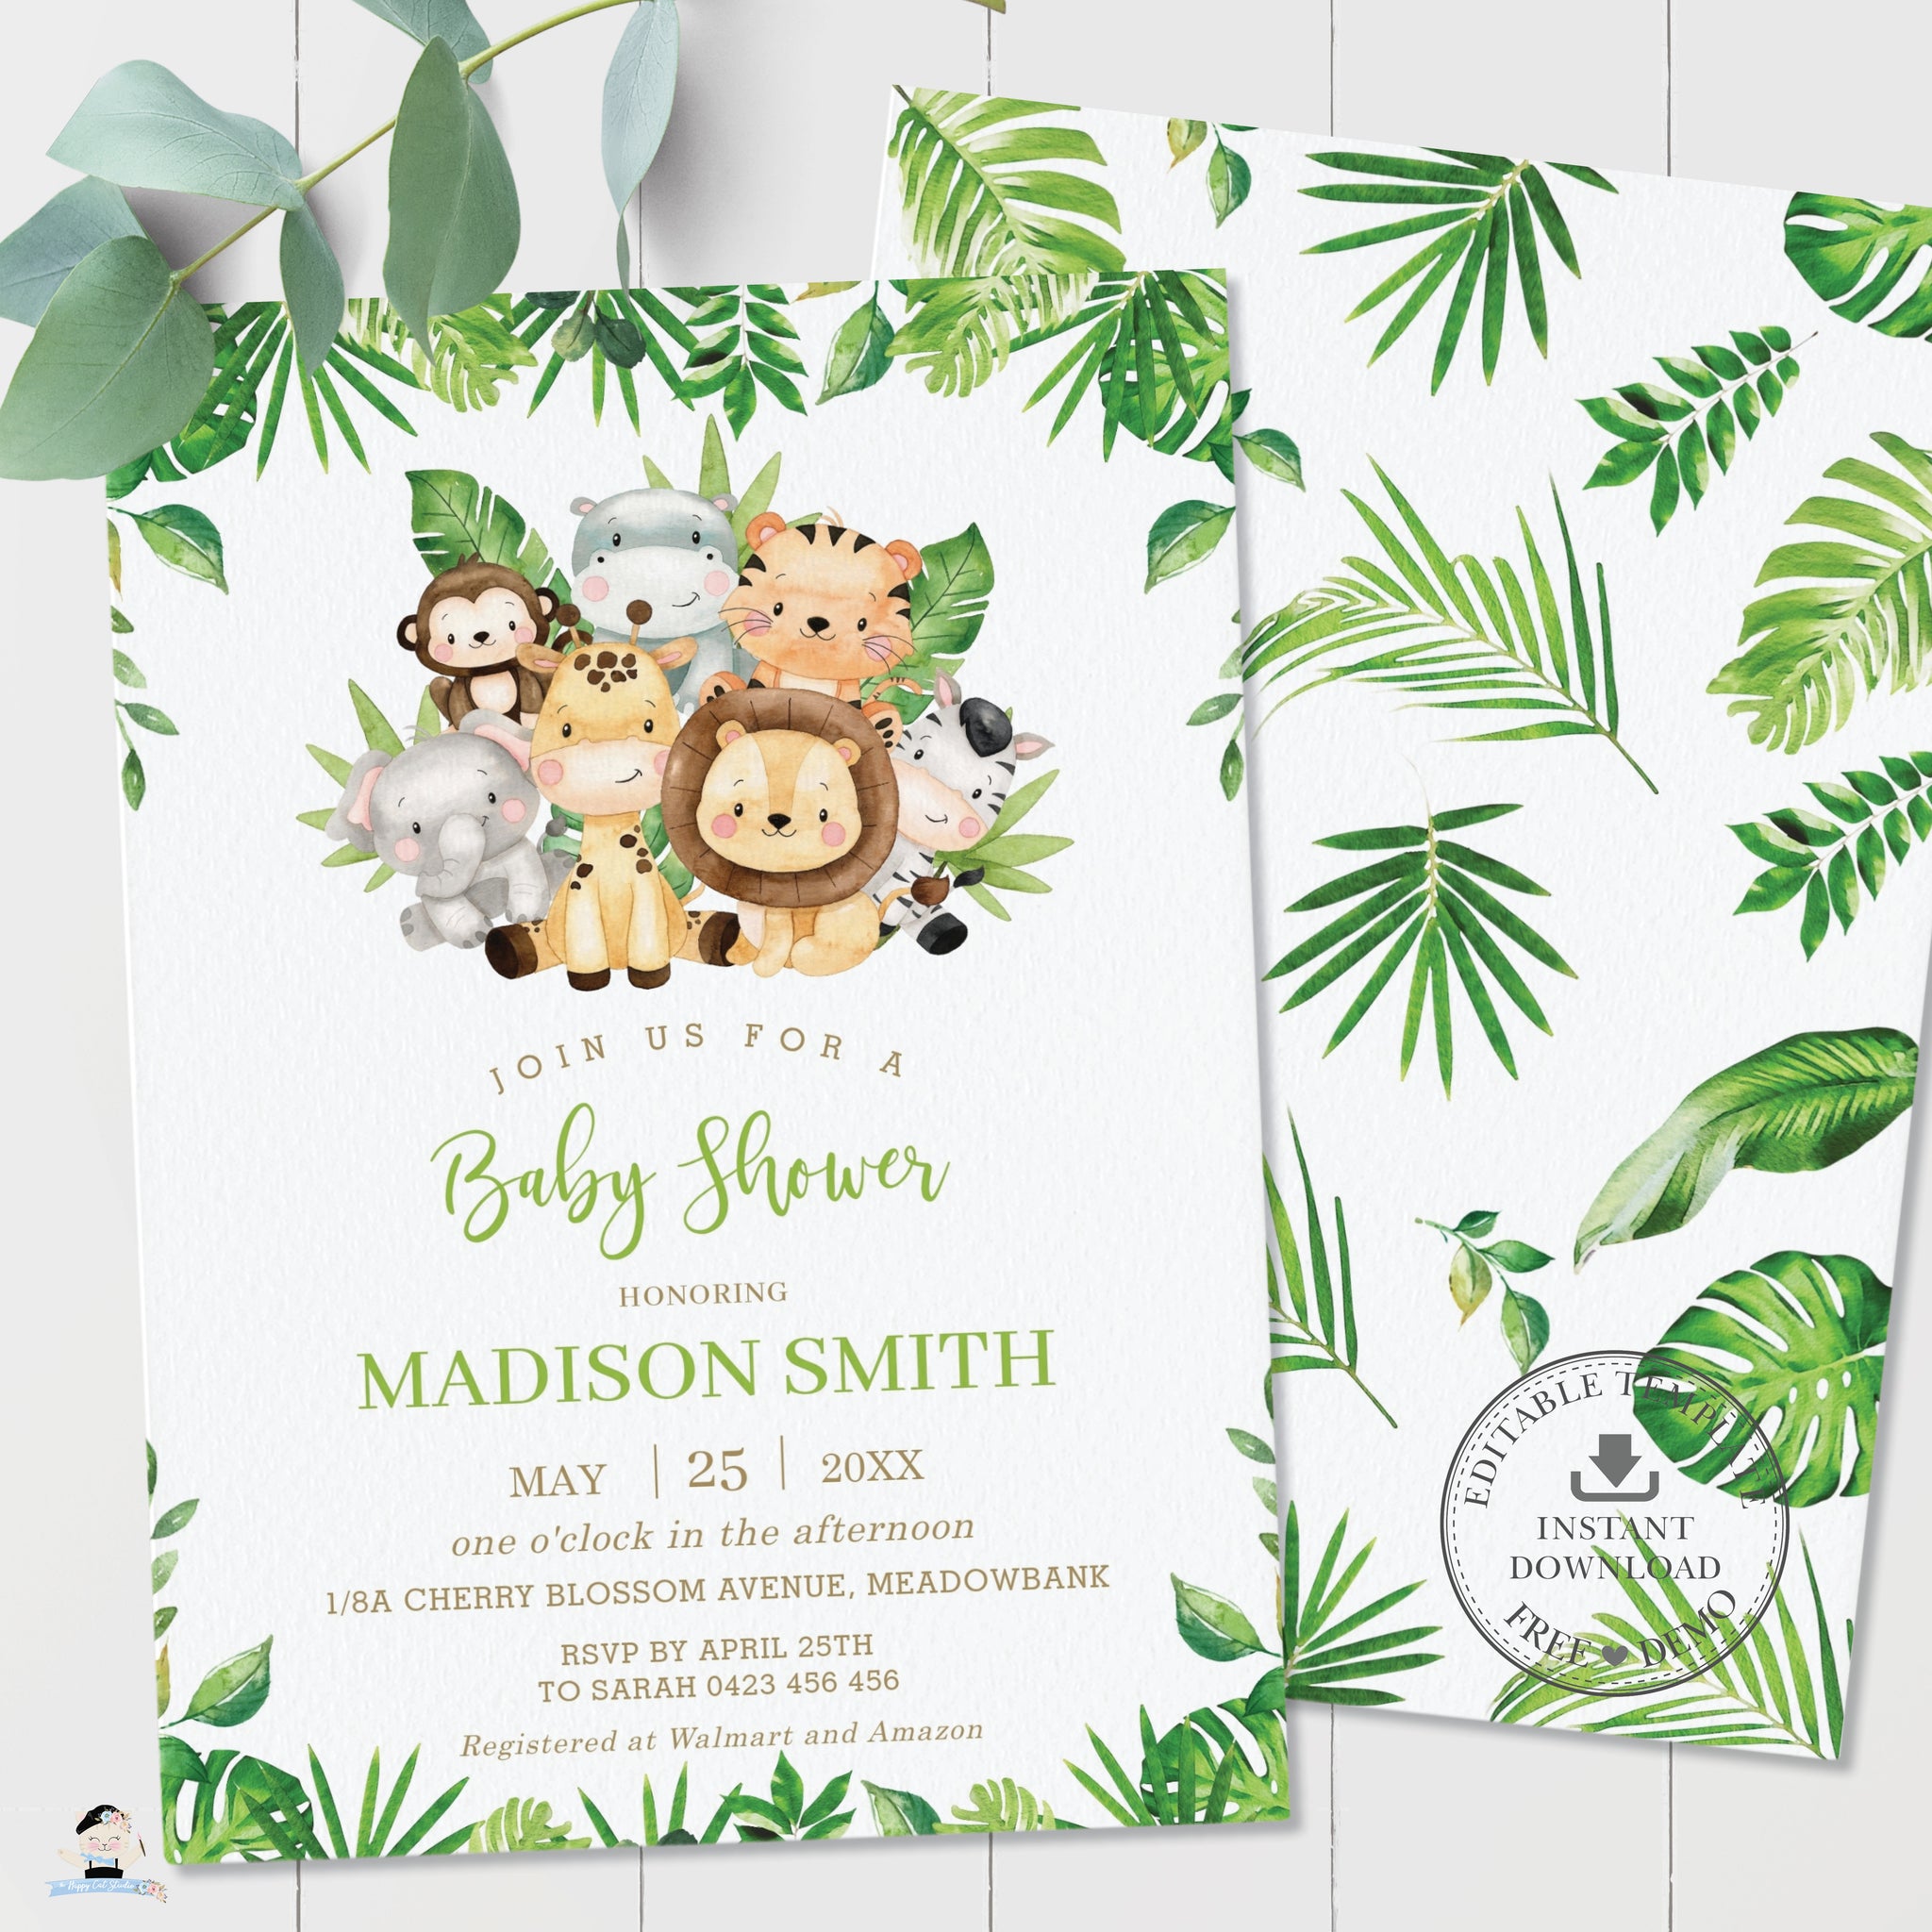 paper-paper-party-supplies-boy-safari-shower-invite-printable-baby-shower-invitation-digital-file